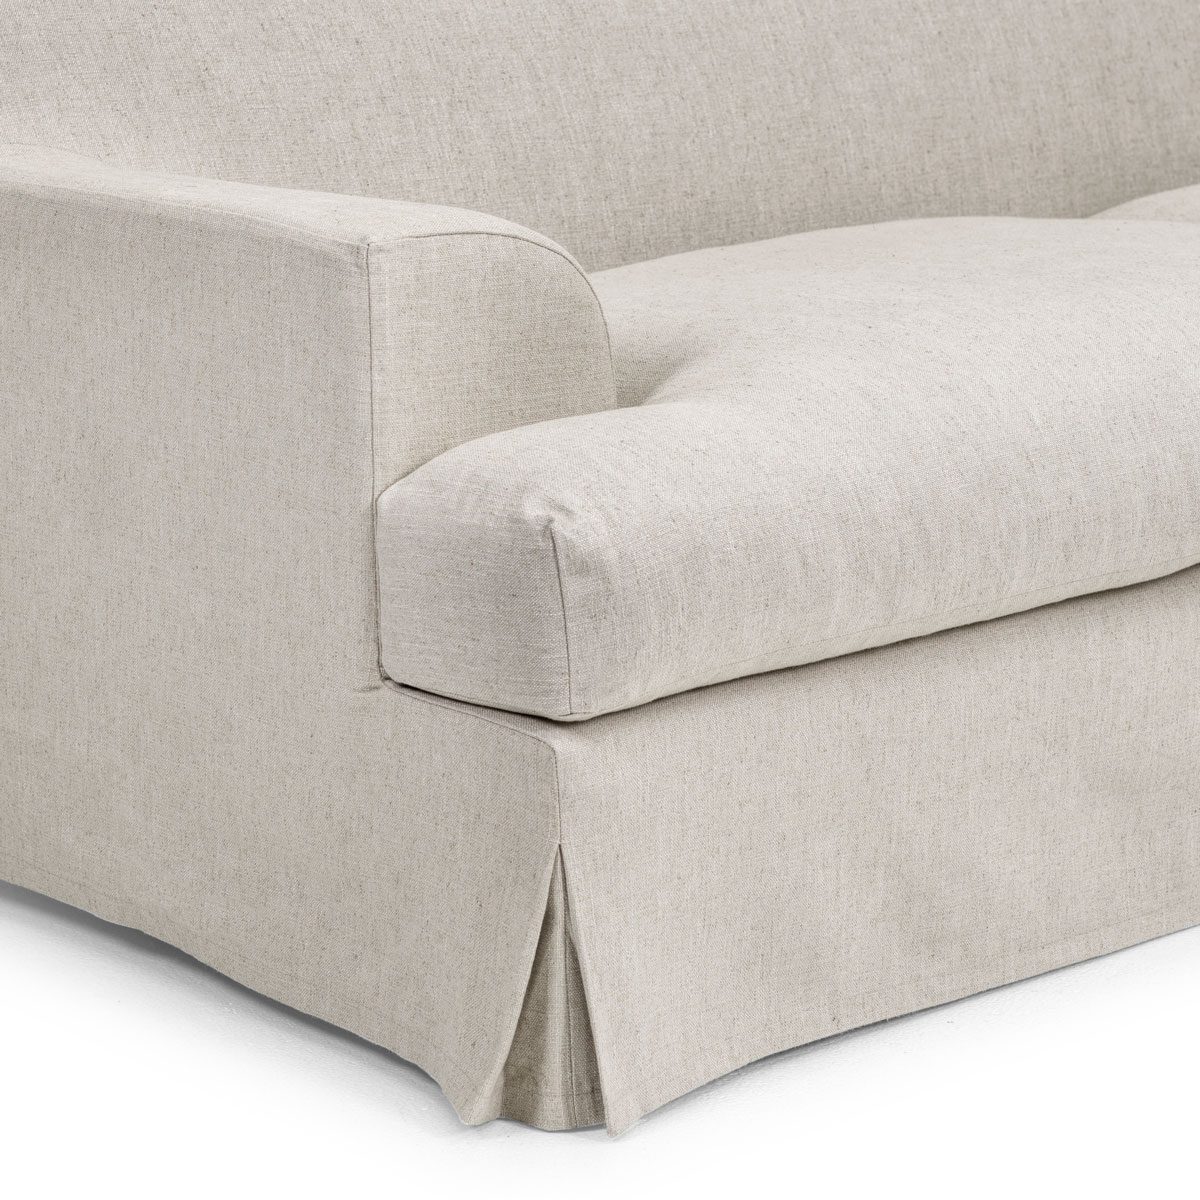 Frances 3-Seat Sofa Off White